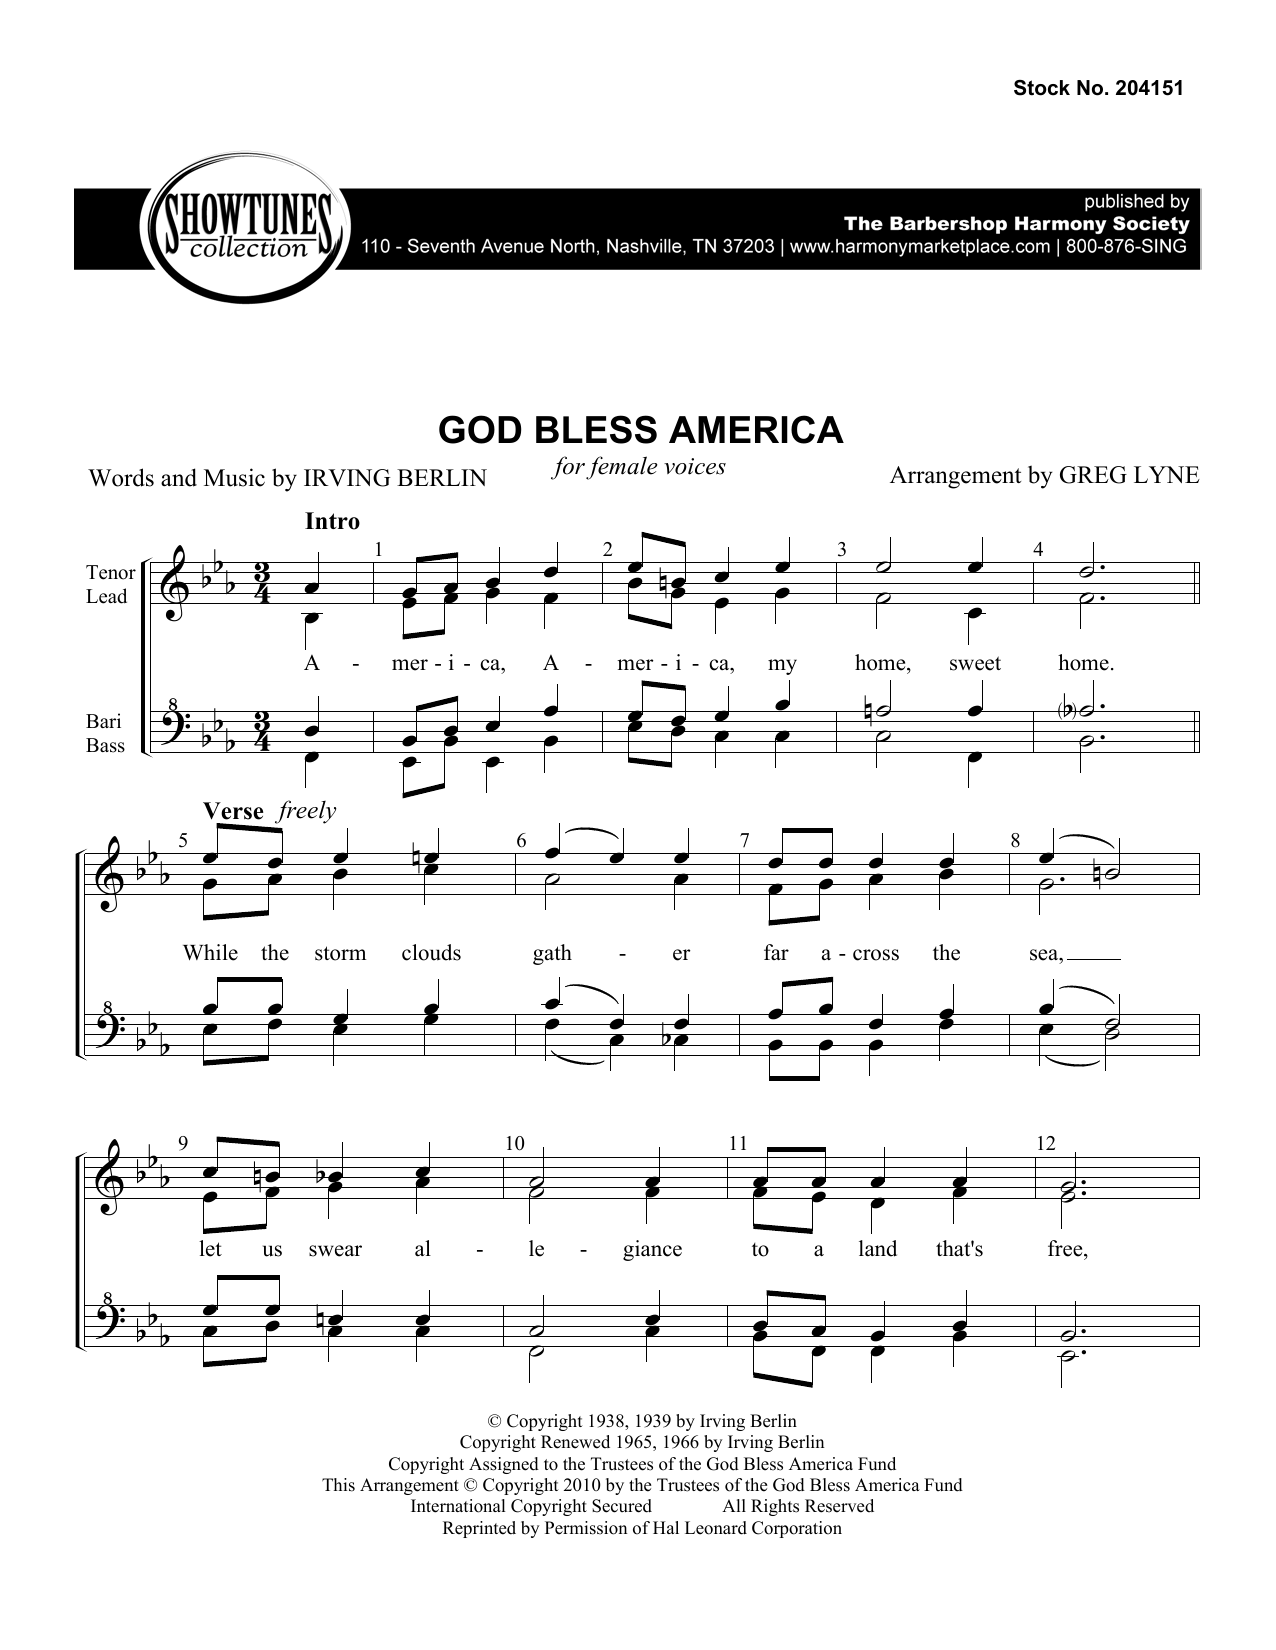 Irving Berlin God Bless America (arr. Greg Lyne) Sheet Music Notes & Chords for SATB Choir - Download or Print PDF